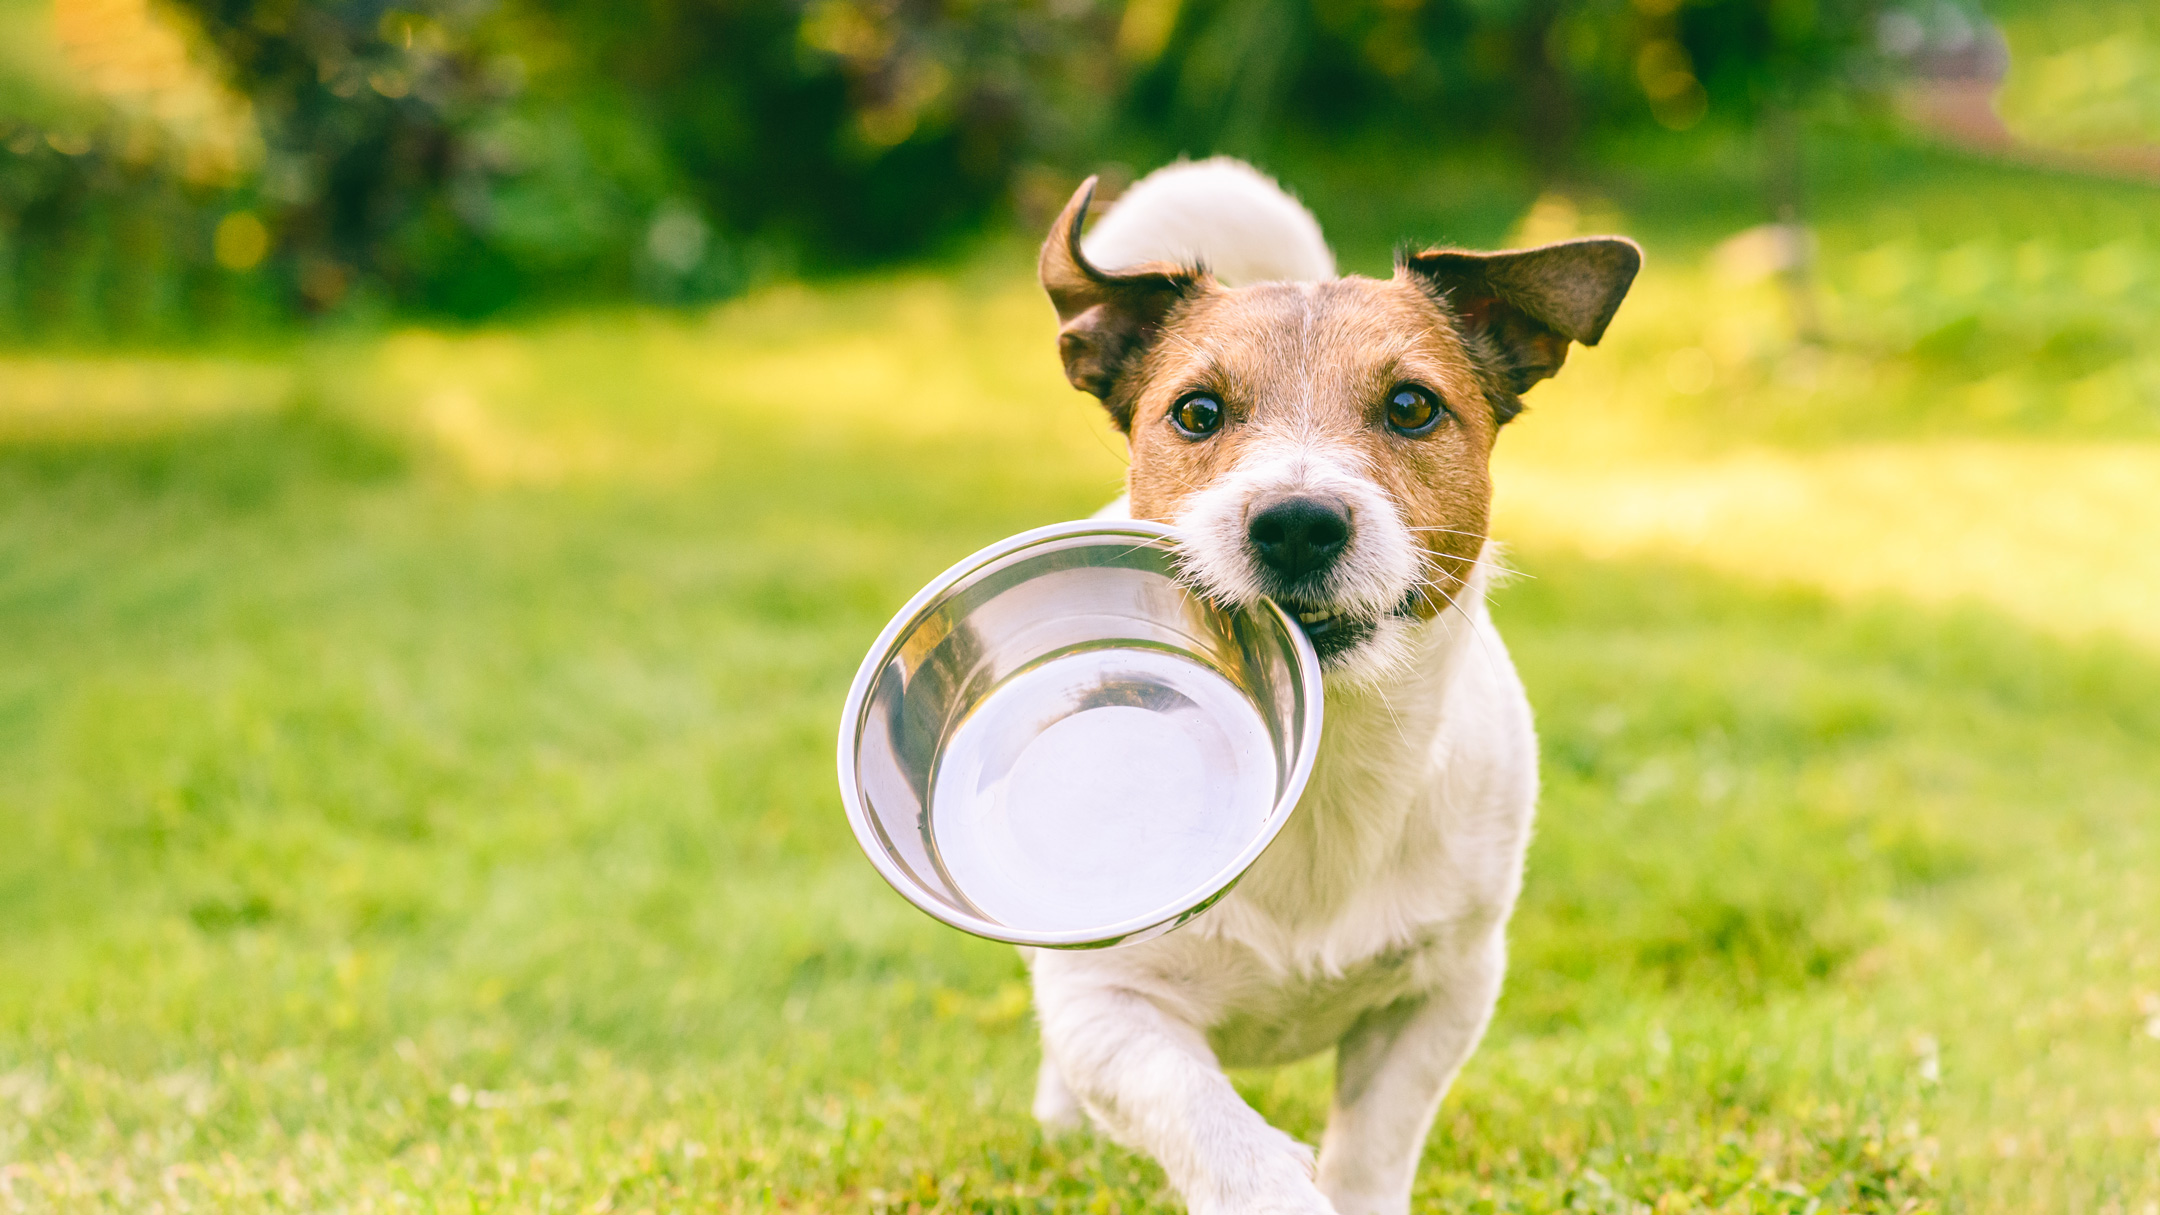 Dog run with food bowl